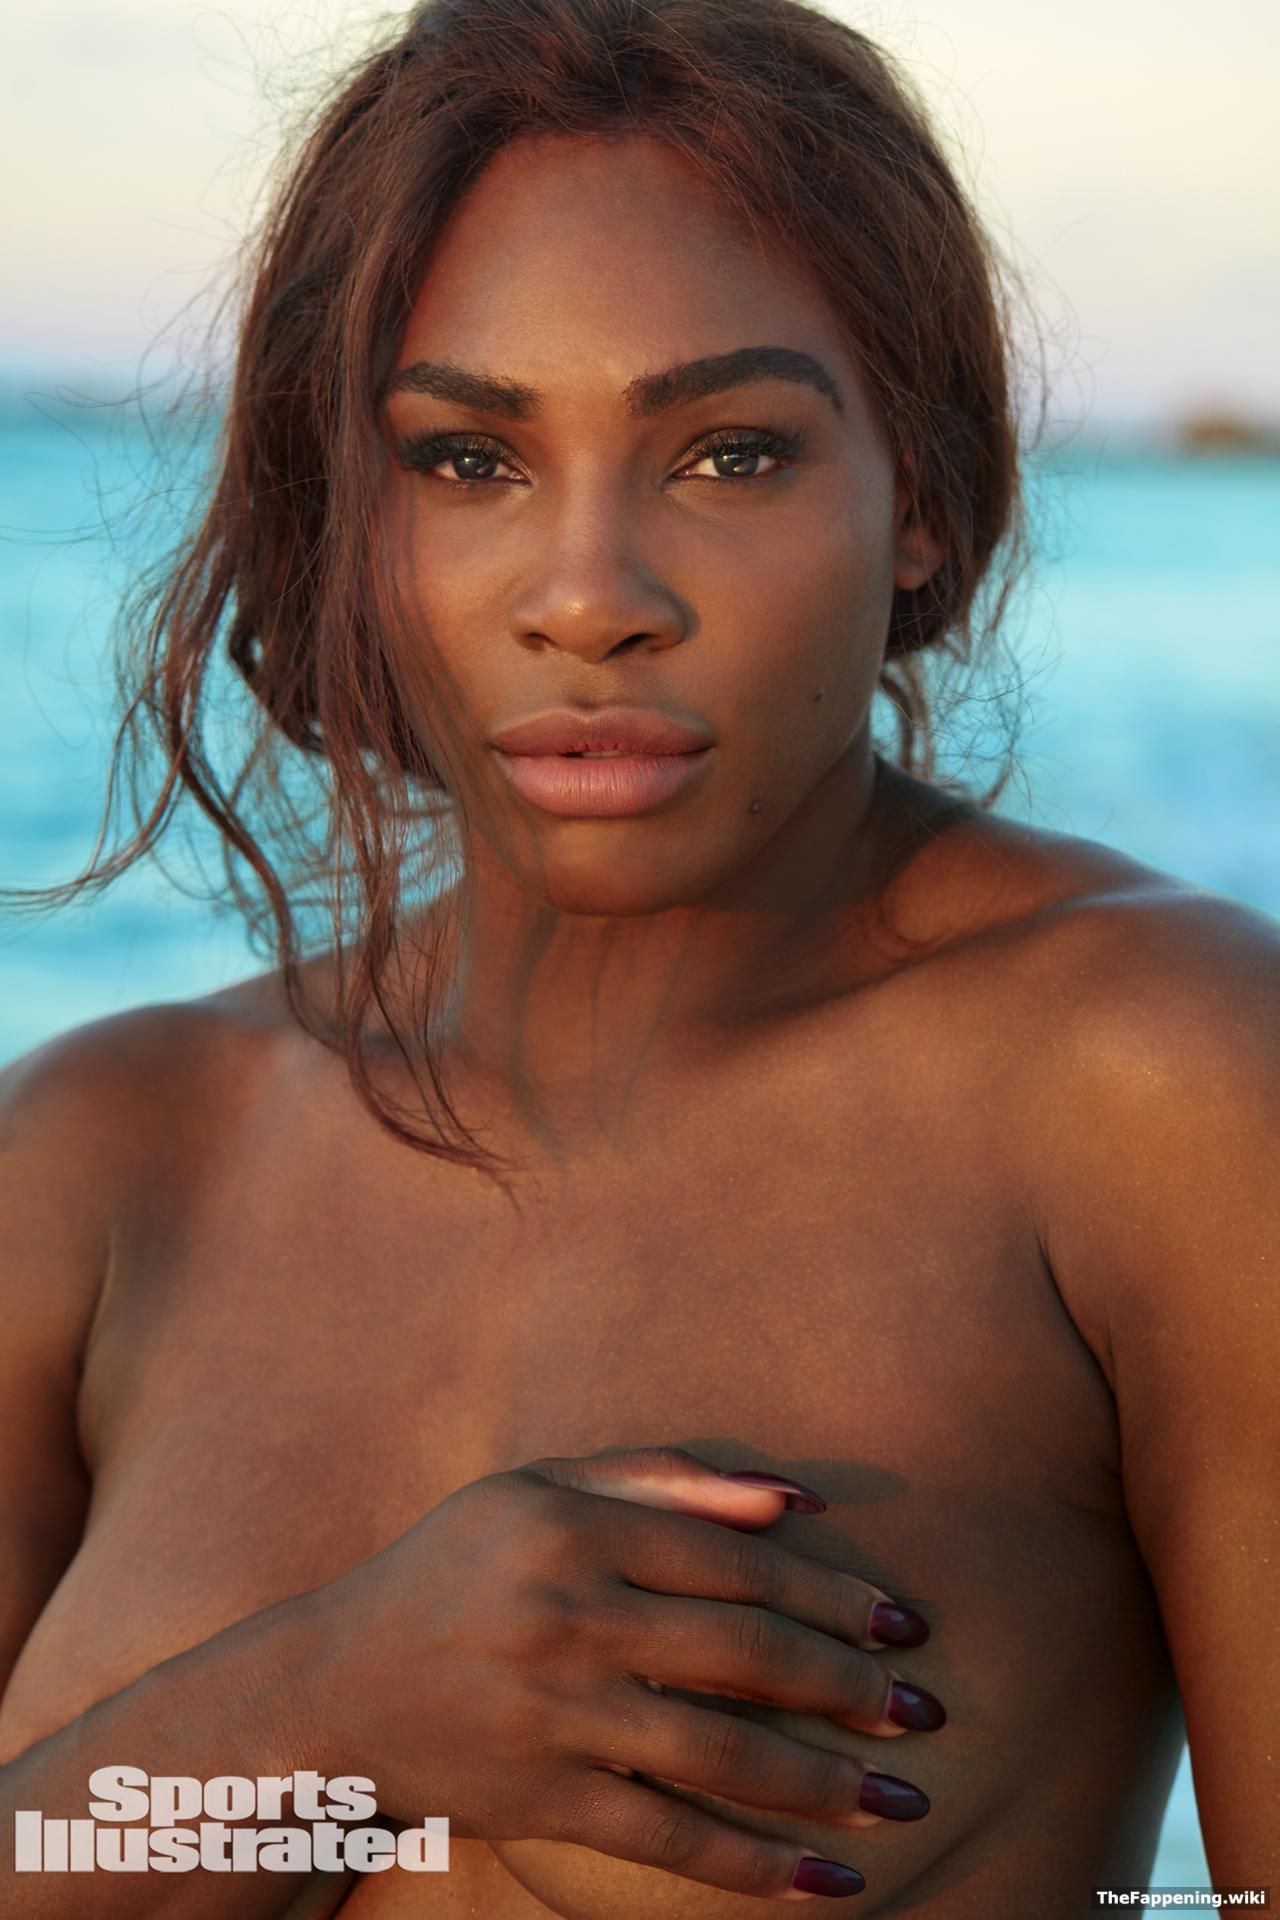 Sarena Sex Video - Serena Williams Nude Pics & Vids - The Fappening